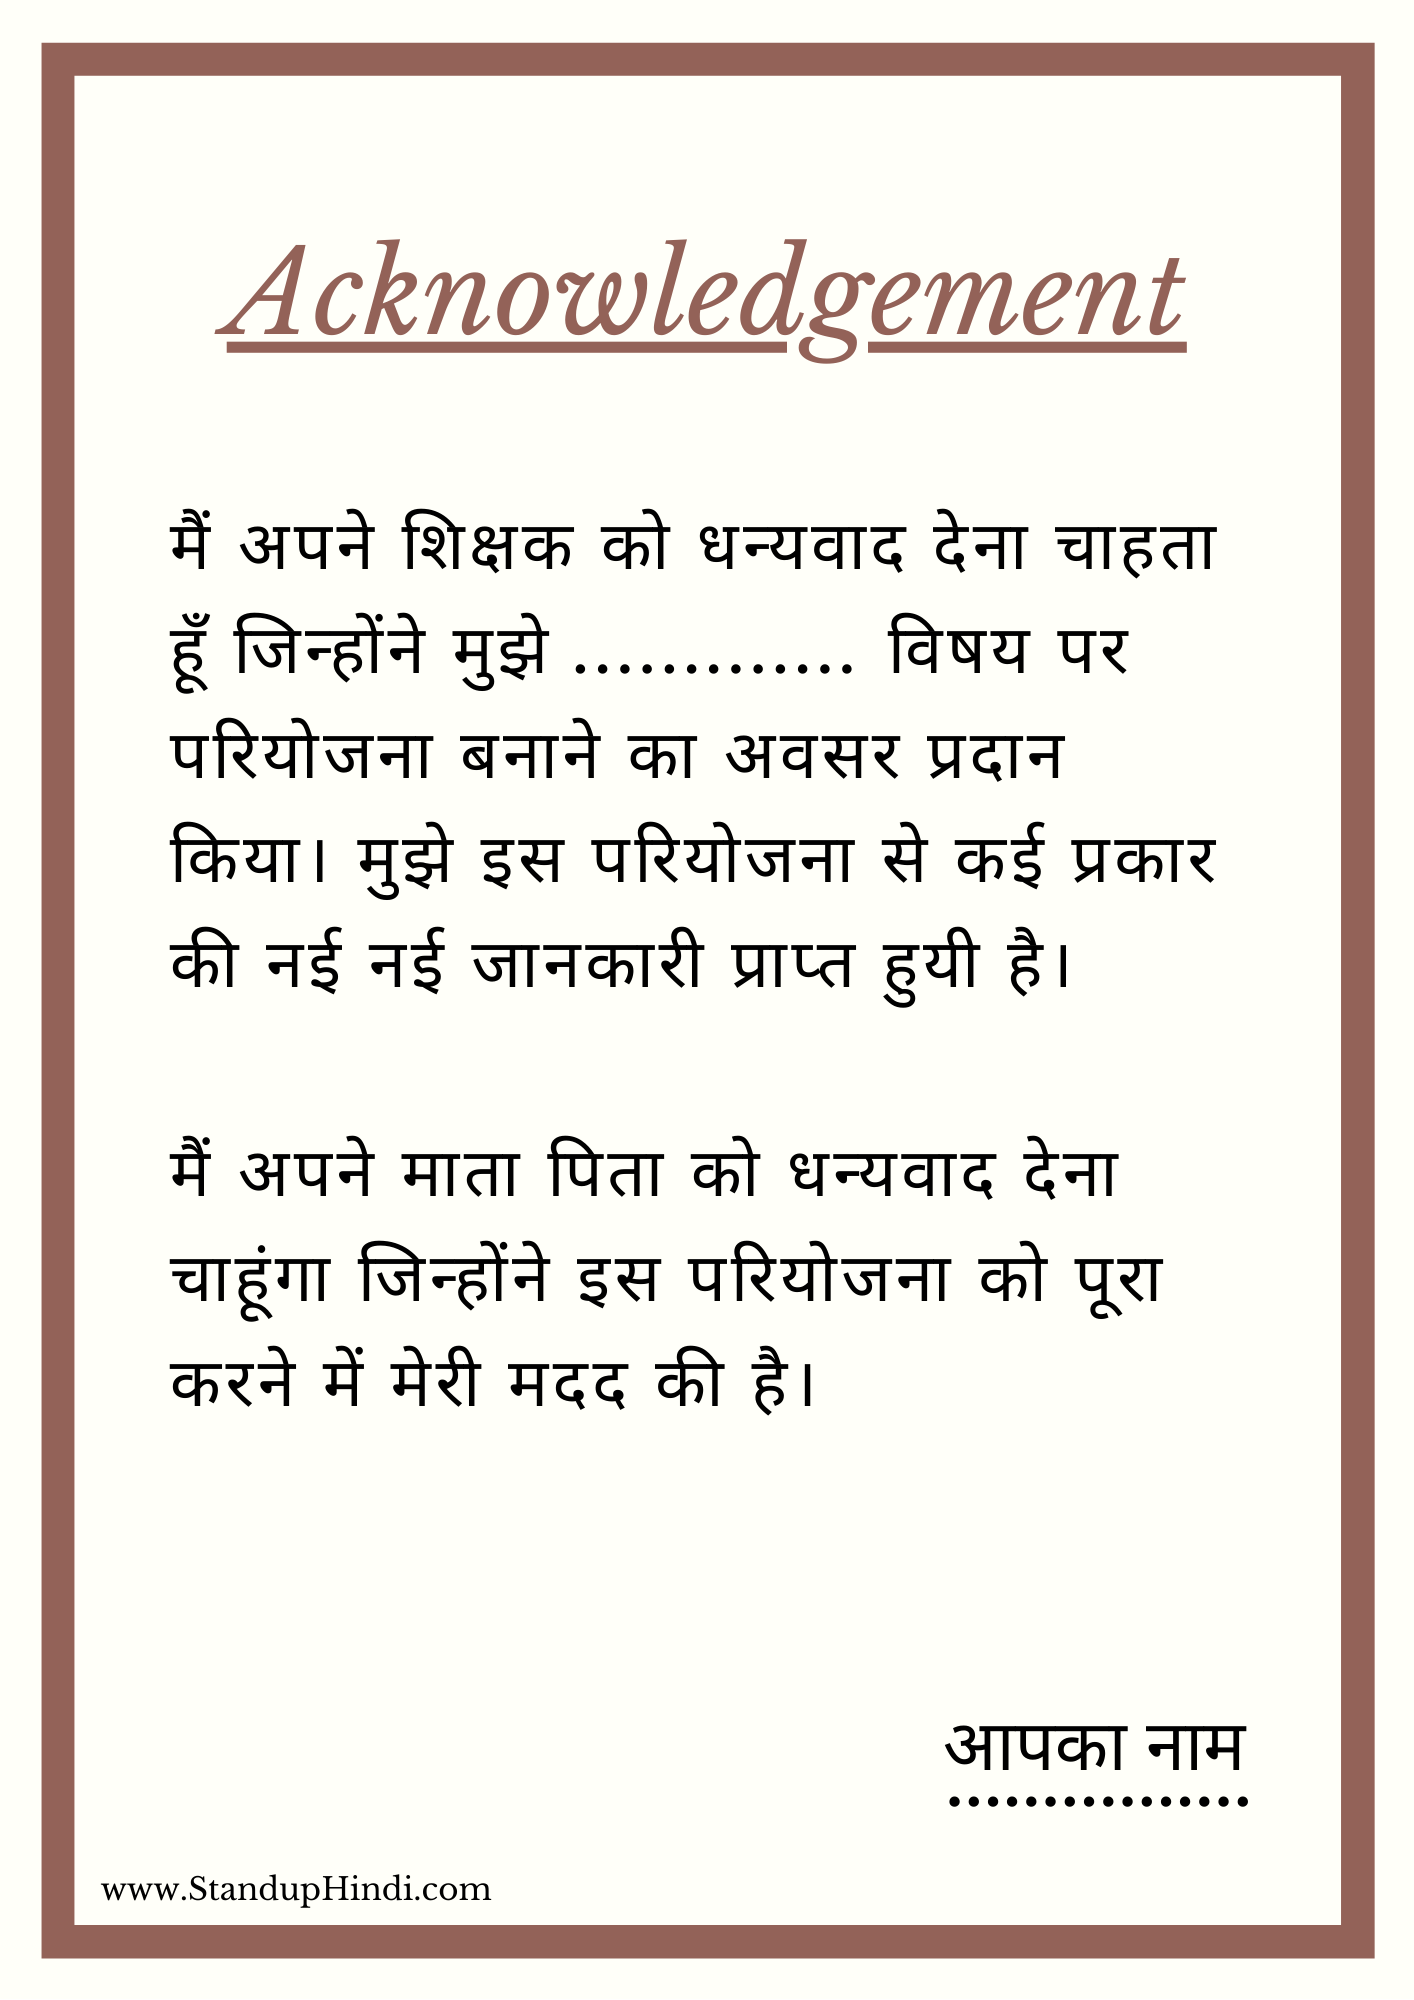 Acknowledgement in Hindi